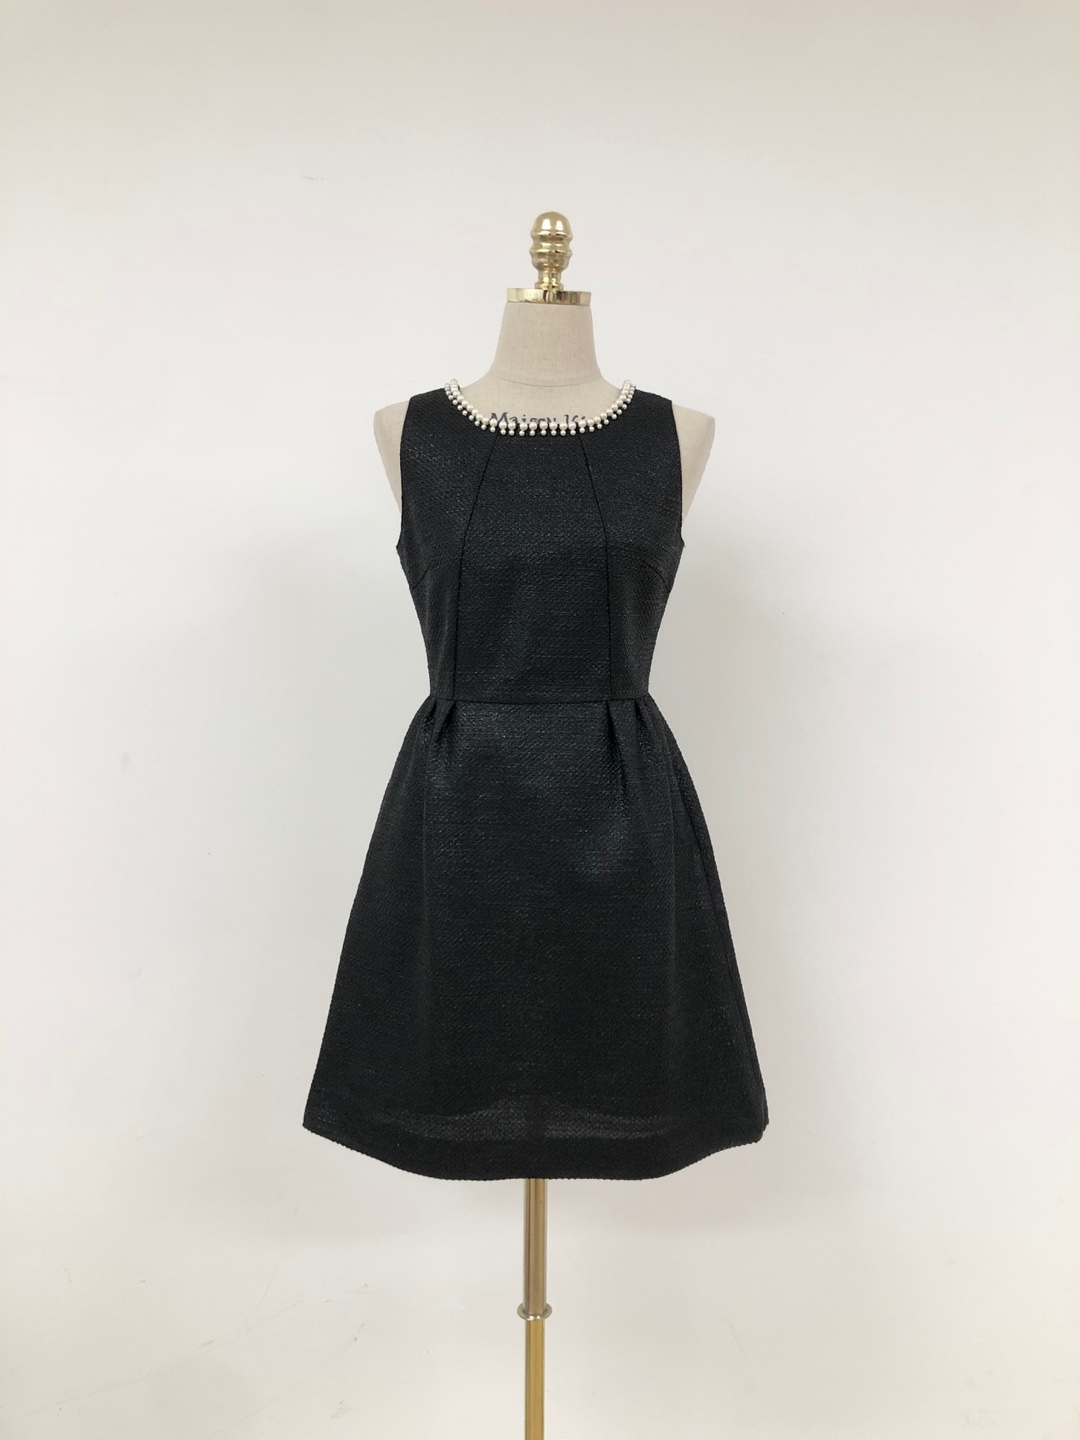 Black pearl neckline sleeveless tweed dress